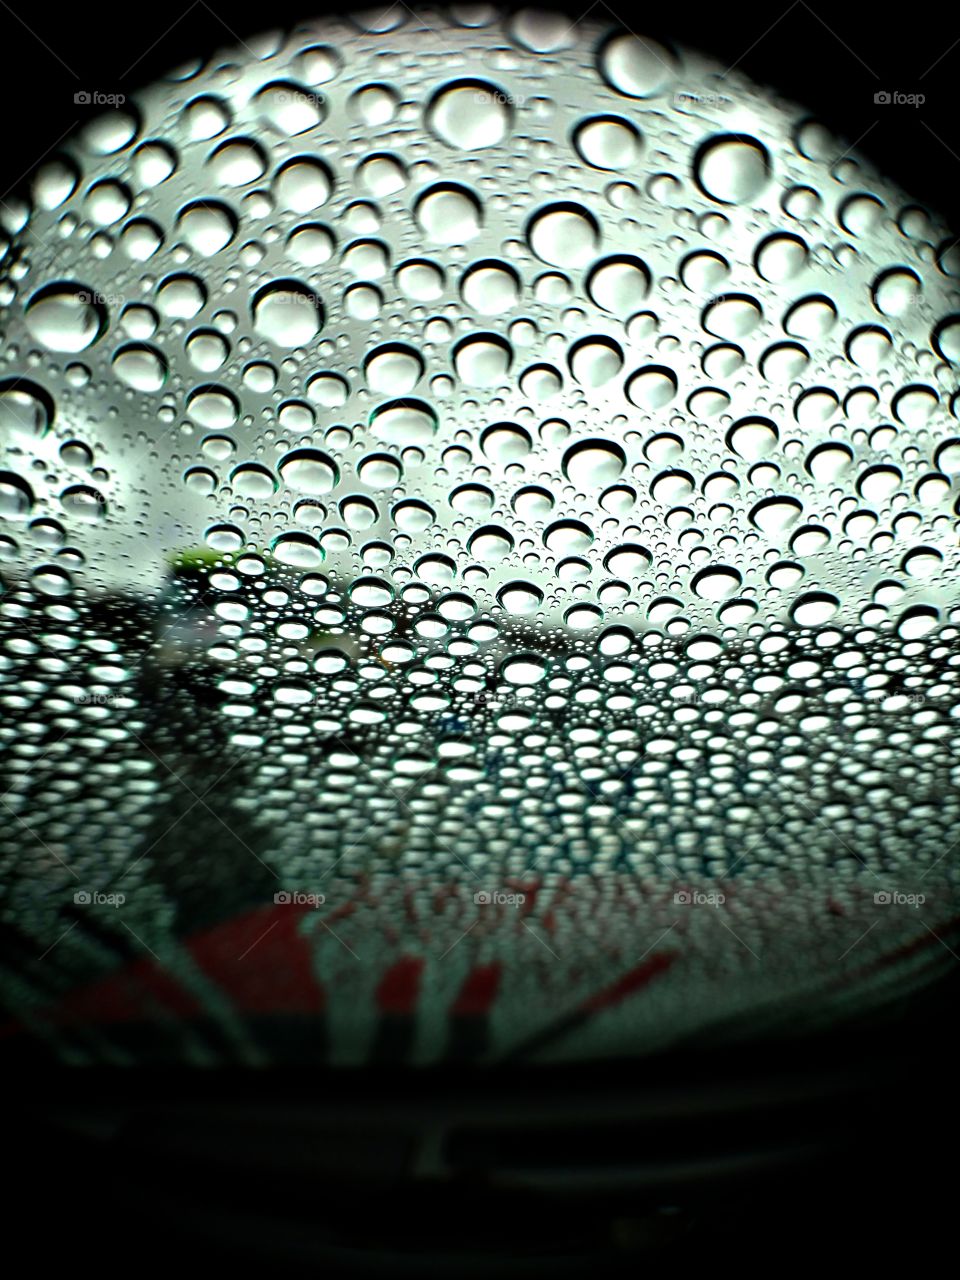 rain on the windshield